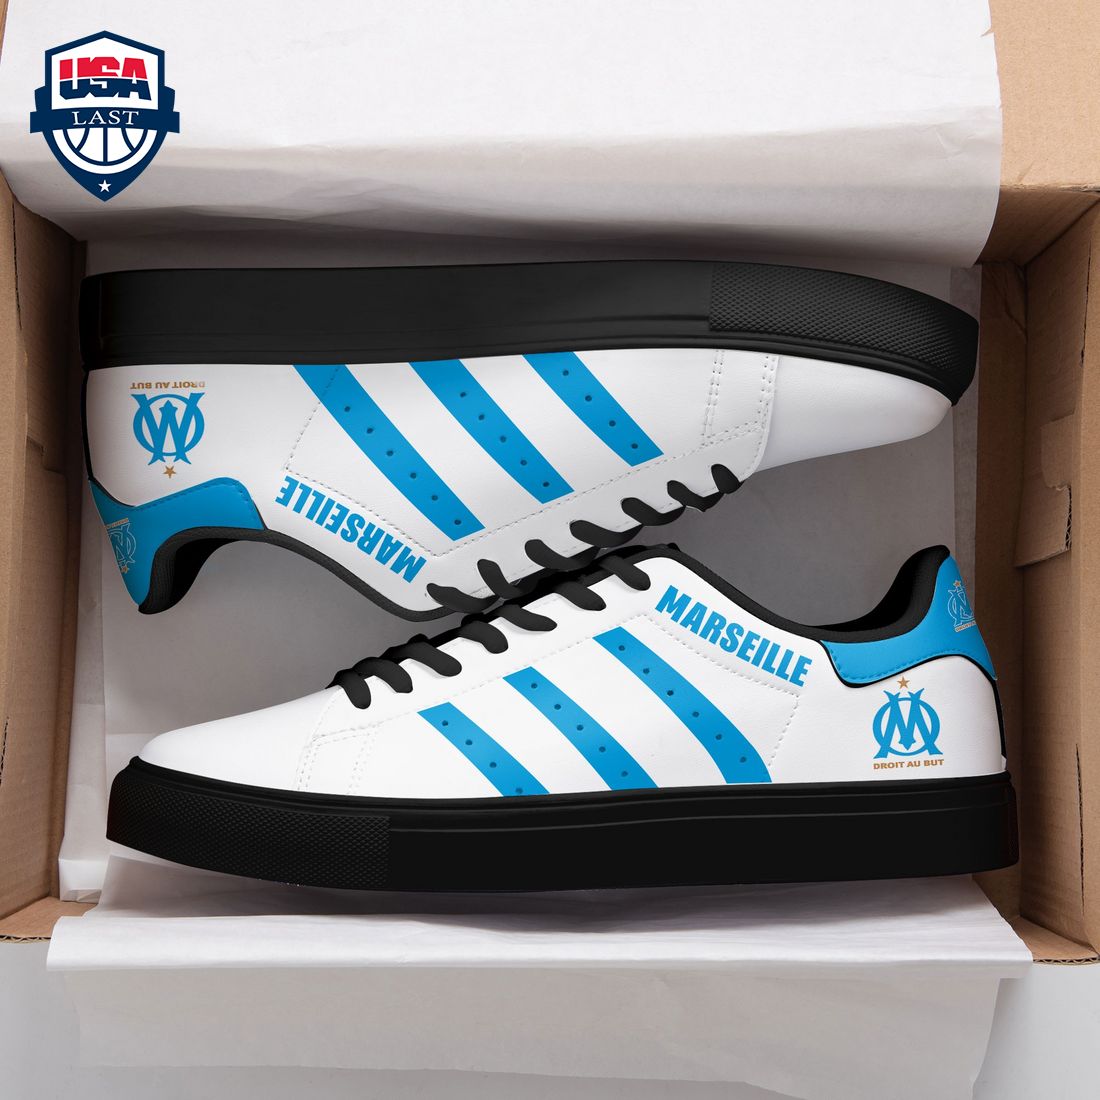 olympique-marseille-aqua-blue-stripes-stan-smith-low-top-shoes-1-r0wyx.jpg